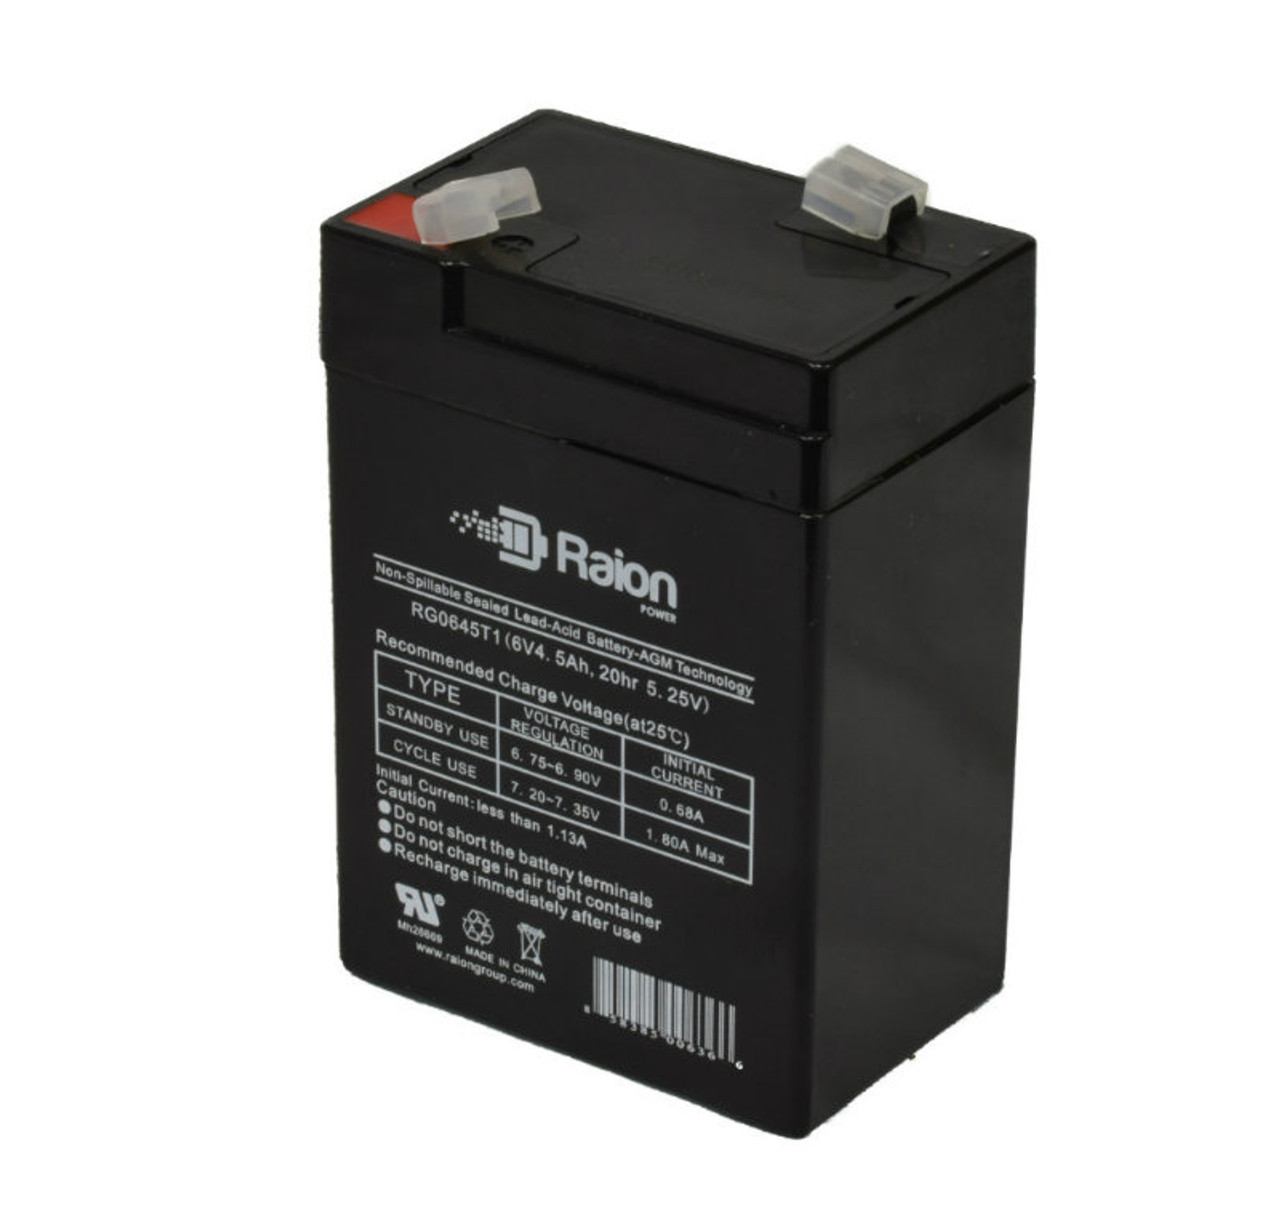 Raion Power RG0645T1 6V 4.5Ah Replacement Battery Cartridge for Kinghero SJ6V4.5Ah